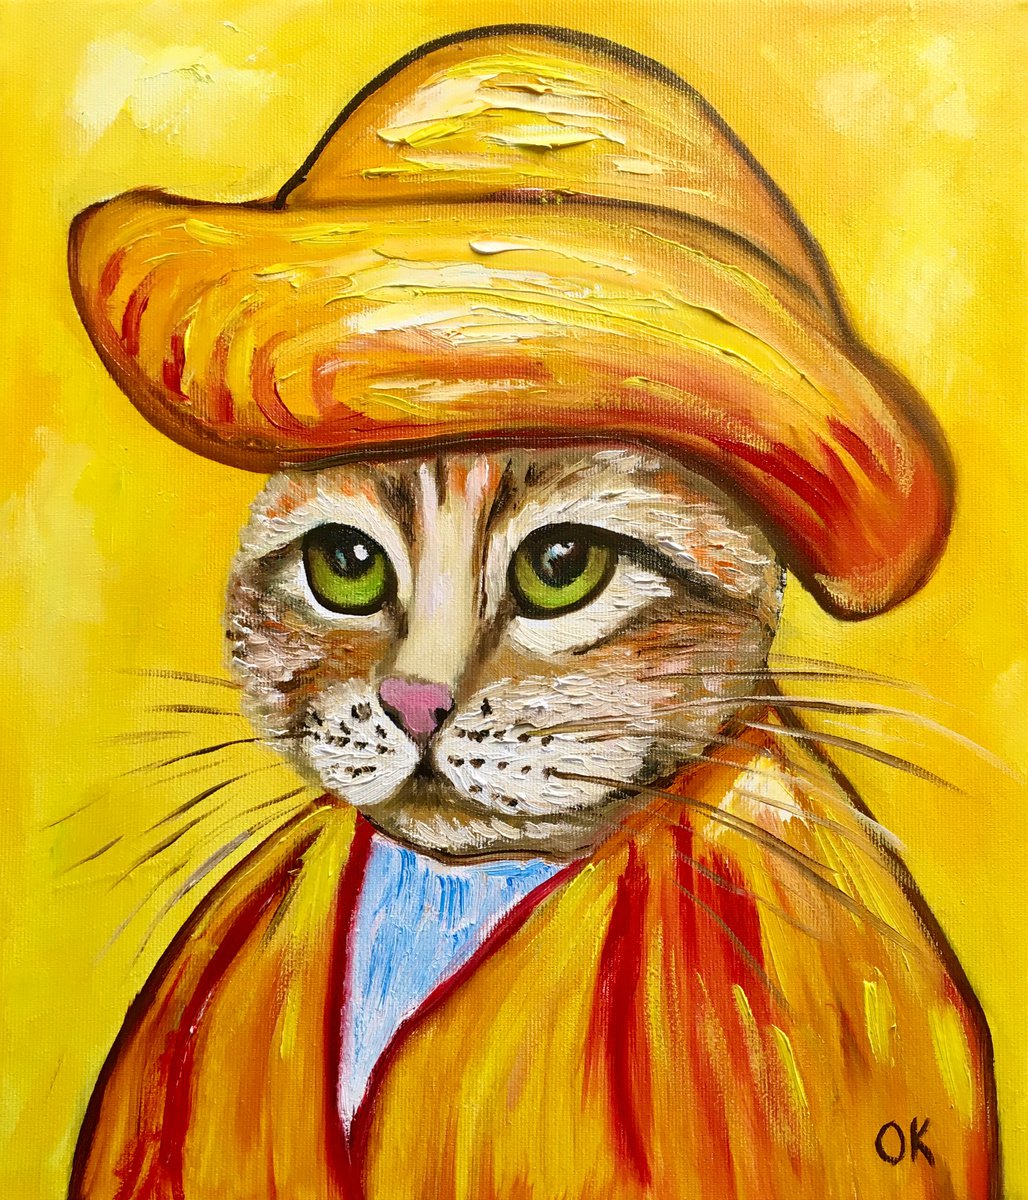 Cat, Vincent Van Gogh inspired by his self-portrait. by Olga Koval